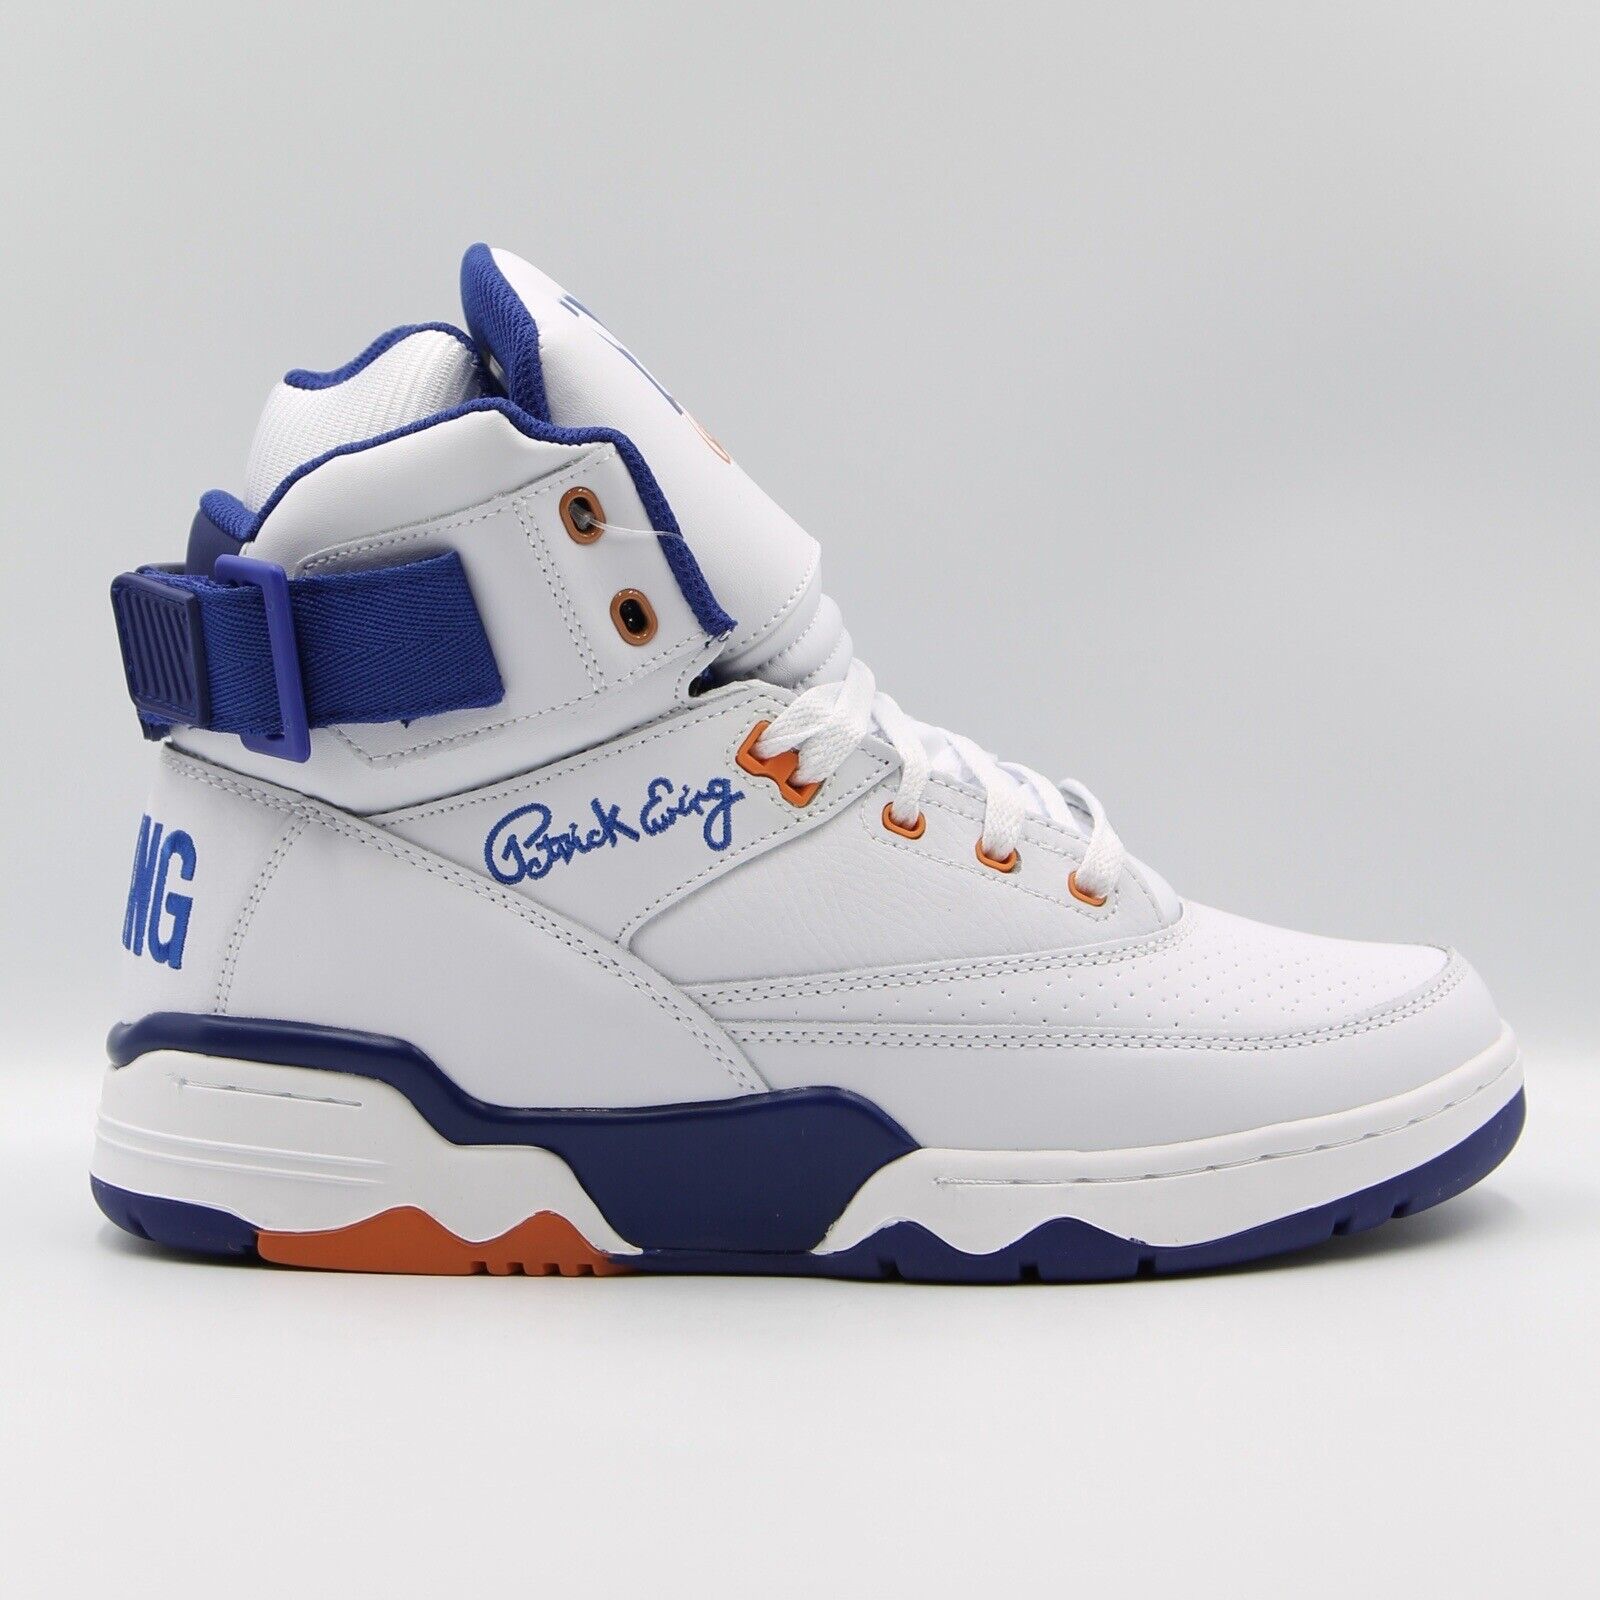 Patrick Ewing 33 Hi Men's Athletic Sneakers Basketball Shoes Knicks White  Orange | eBay